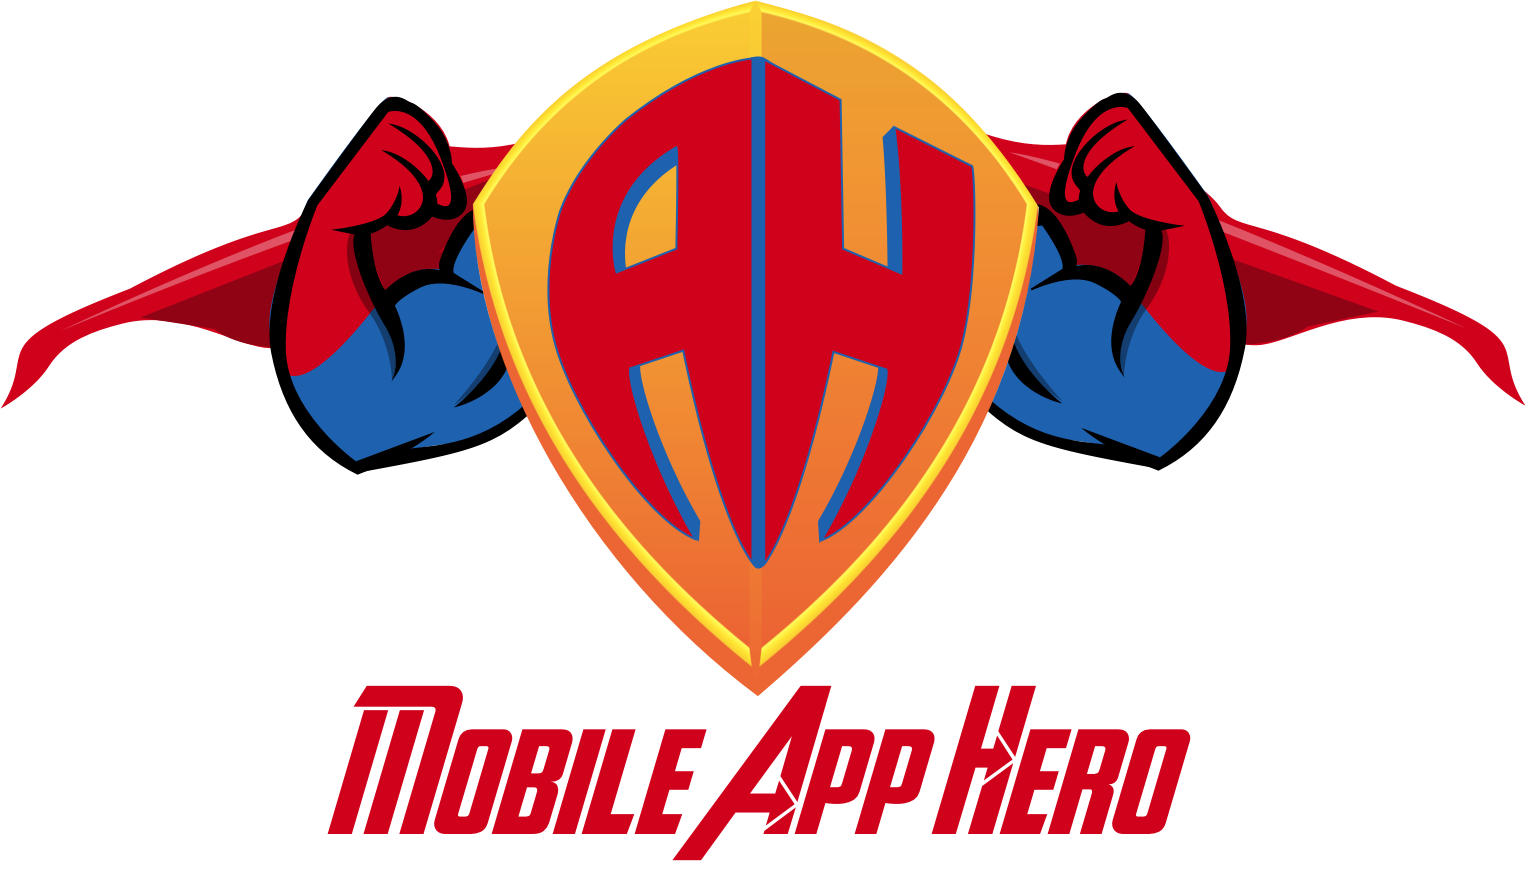 Mobile App Hero